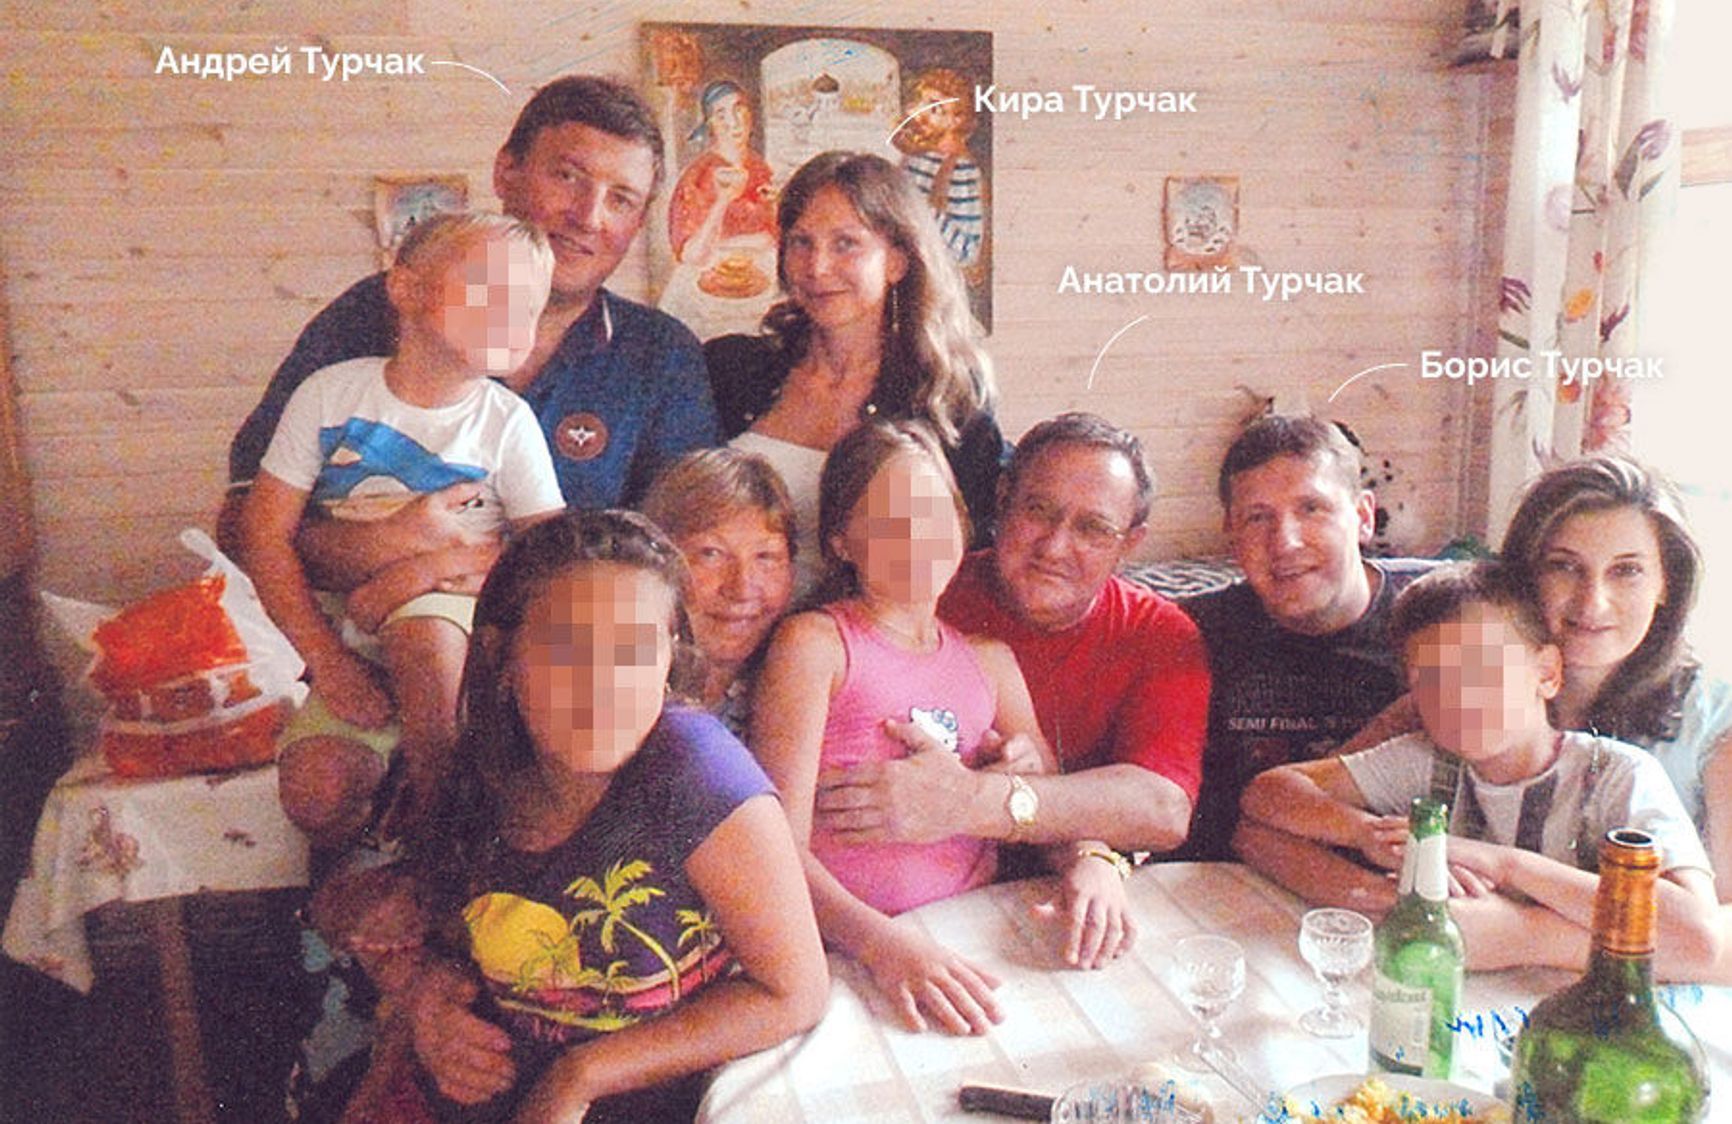 Turchak family, 2013